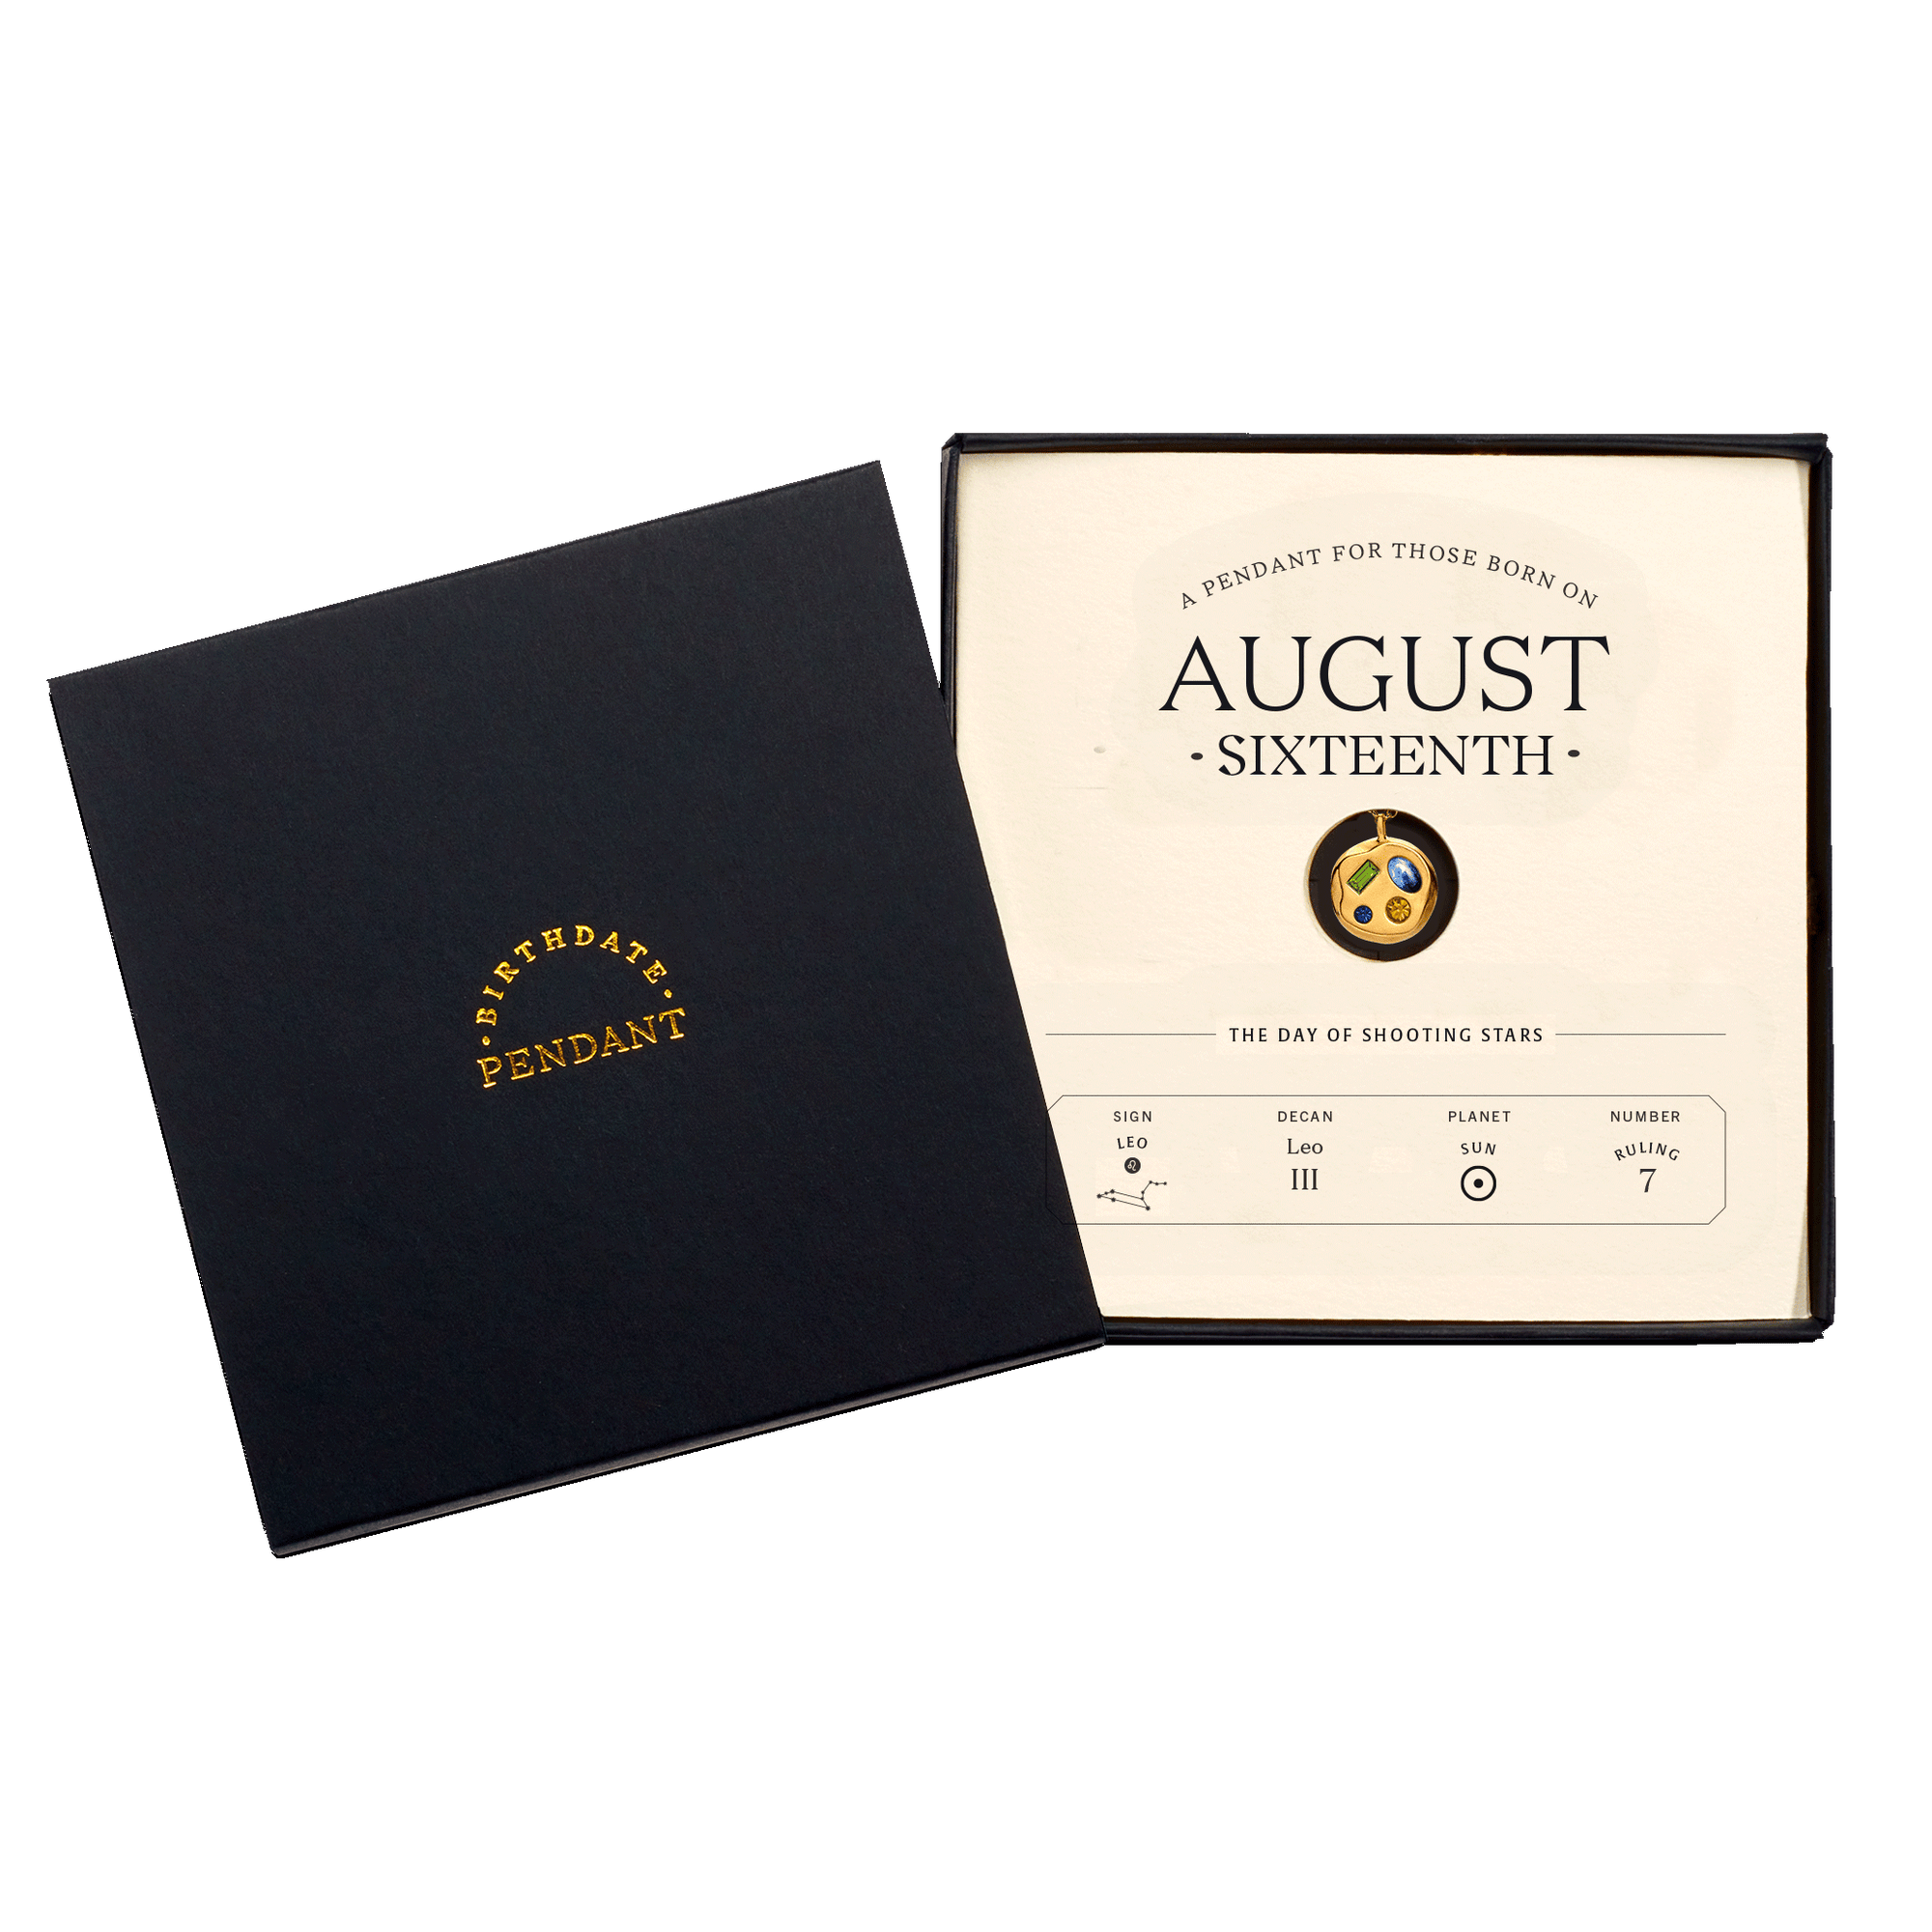 The August Sixteenth Pendant inside its box